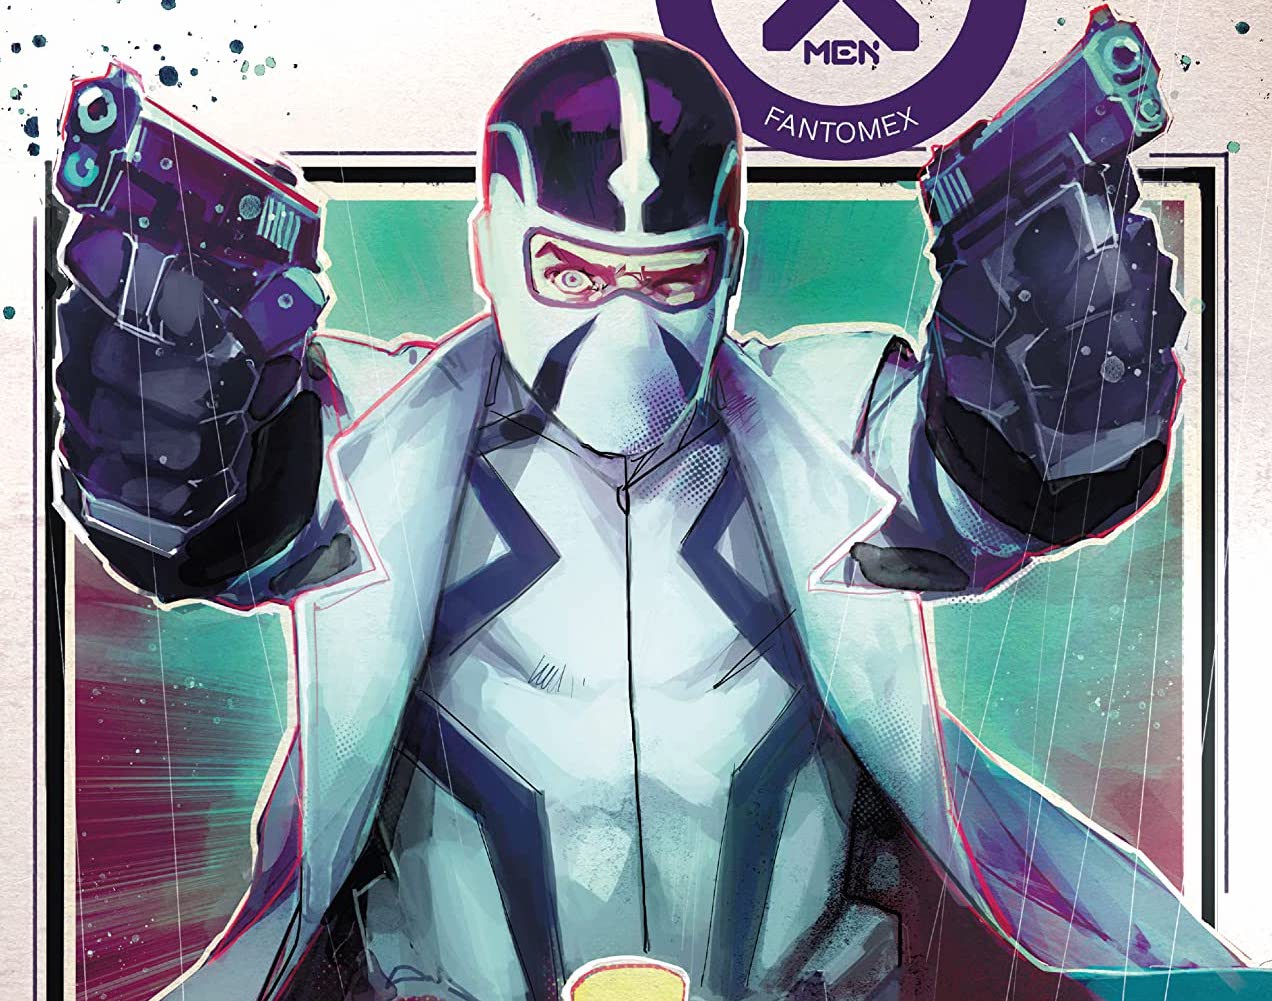 'Giant-Size X-Men: Fantomex' #1 review